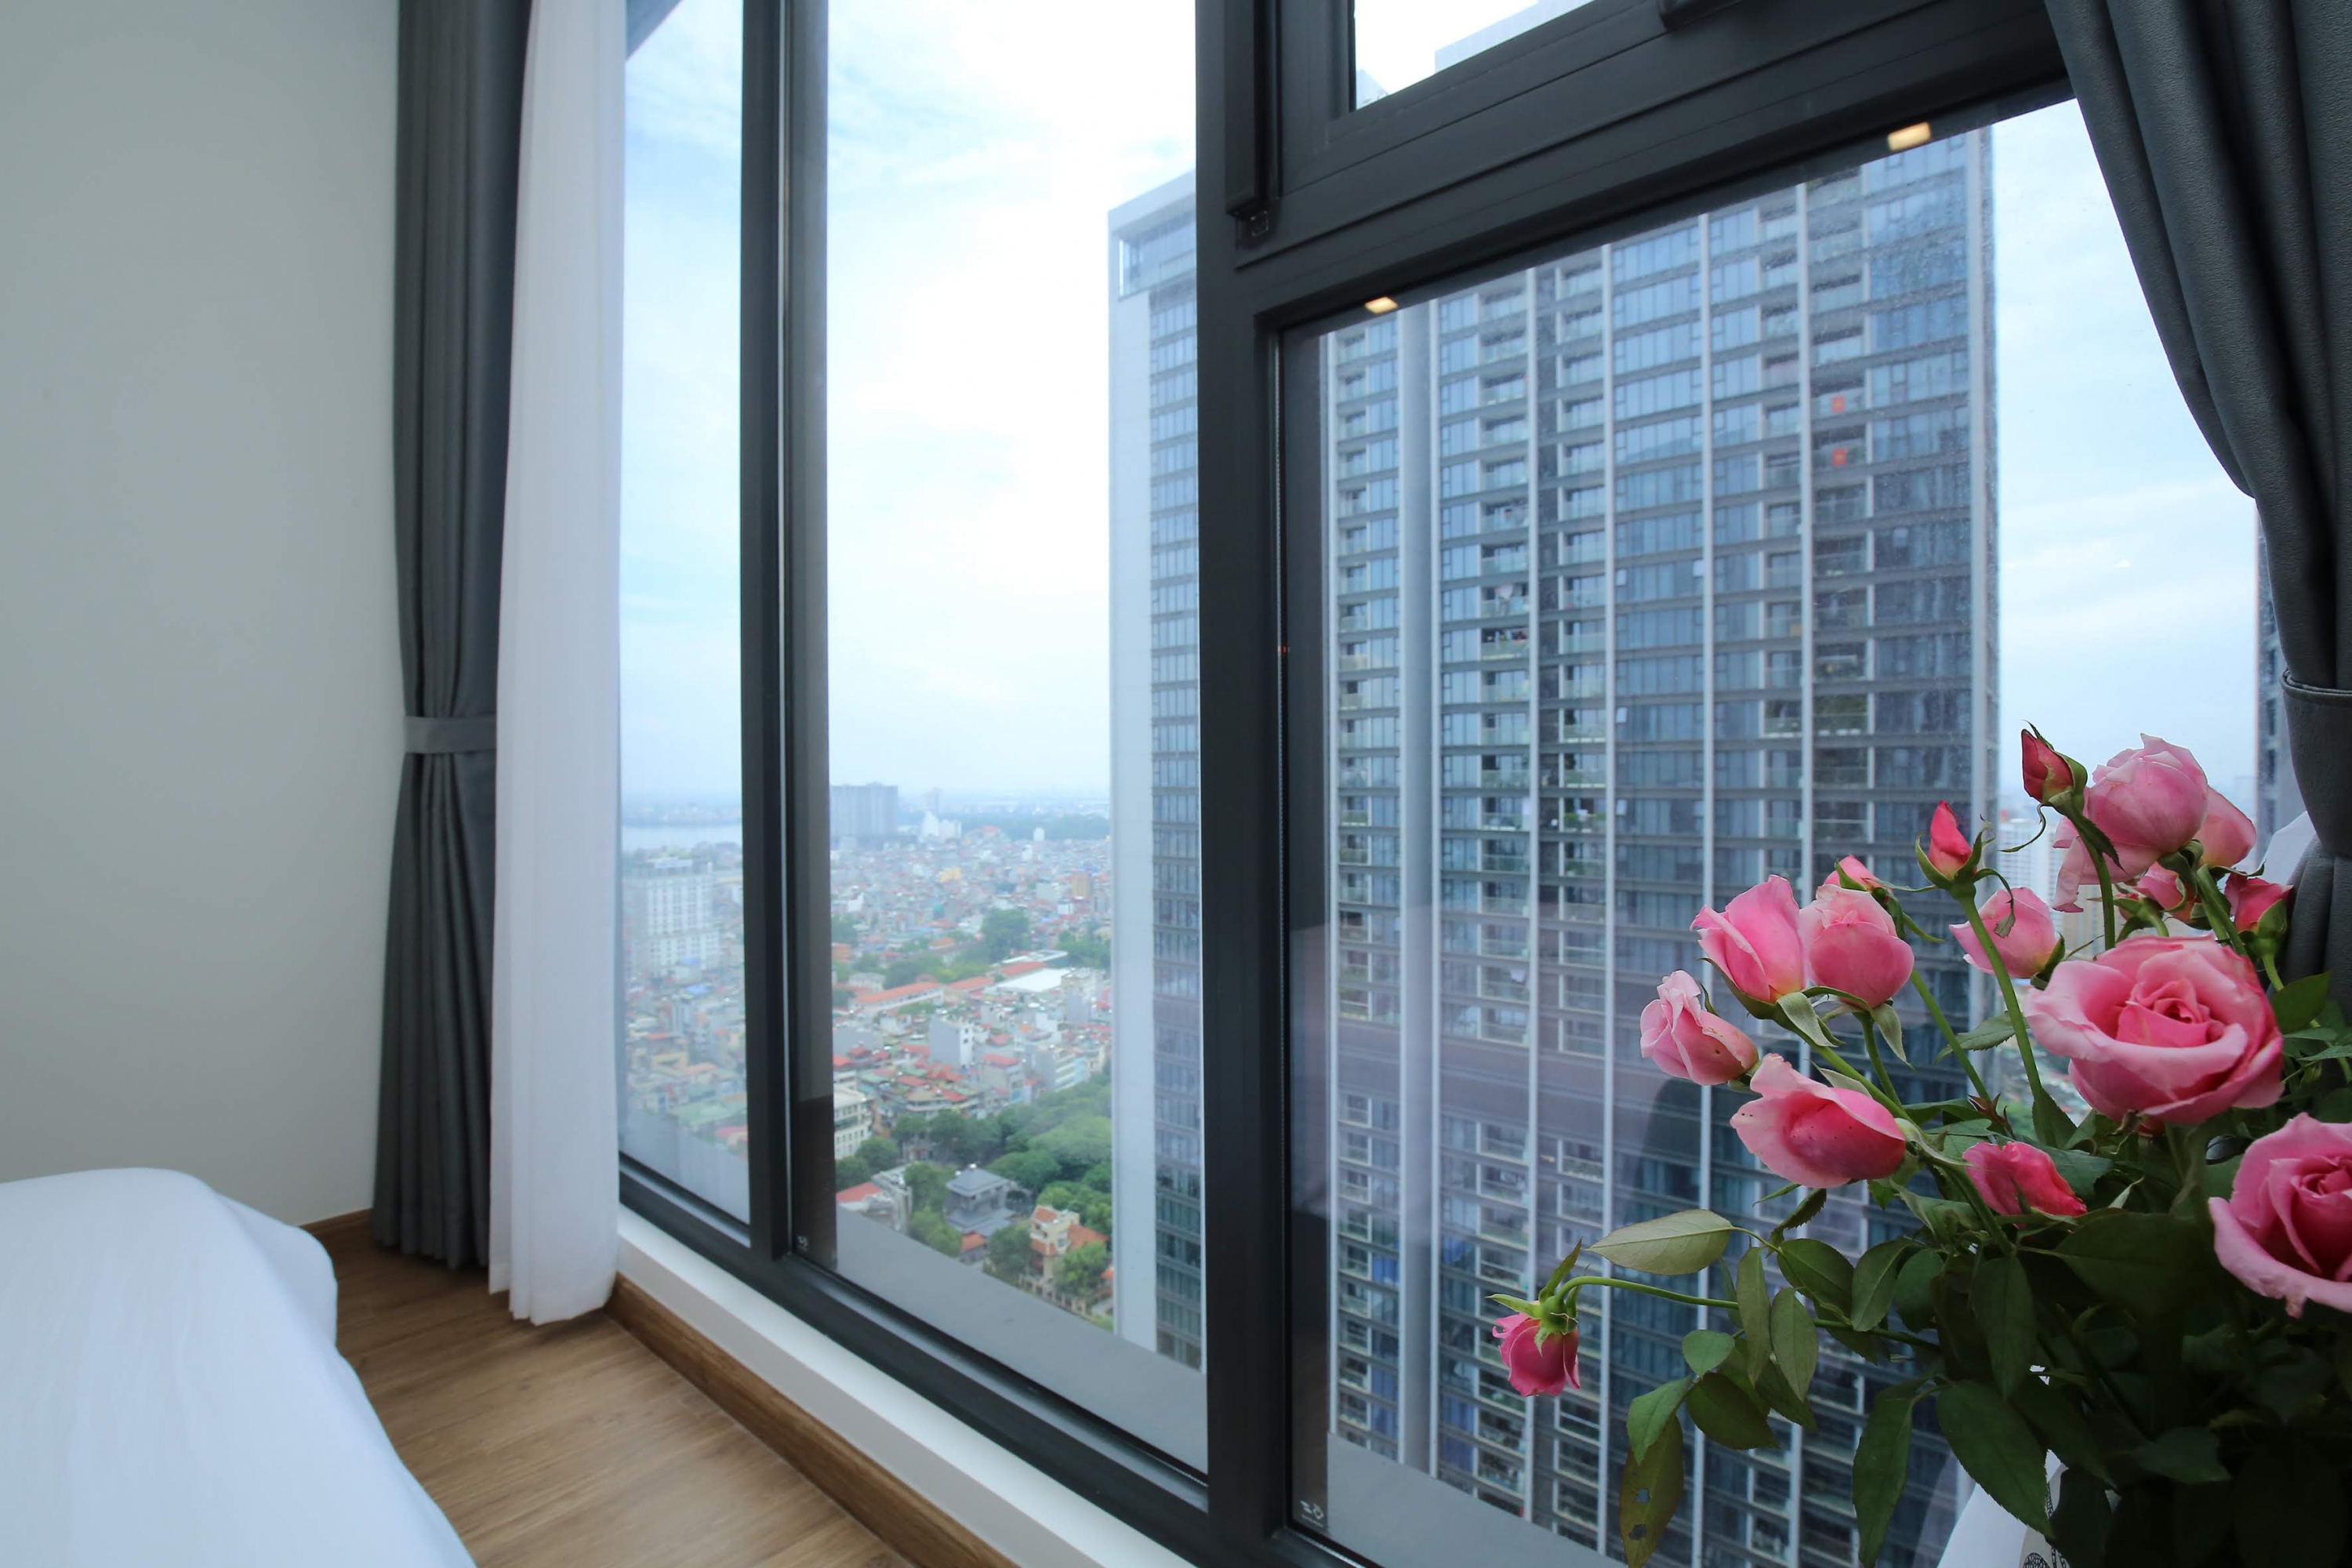 *3BR + 1* Apartment for Rent in Vinhomes Metropolis, 29 Lieu Giai Str, Ba Dinh Dist, Hanoi.